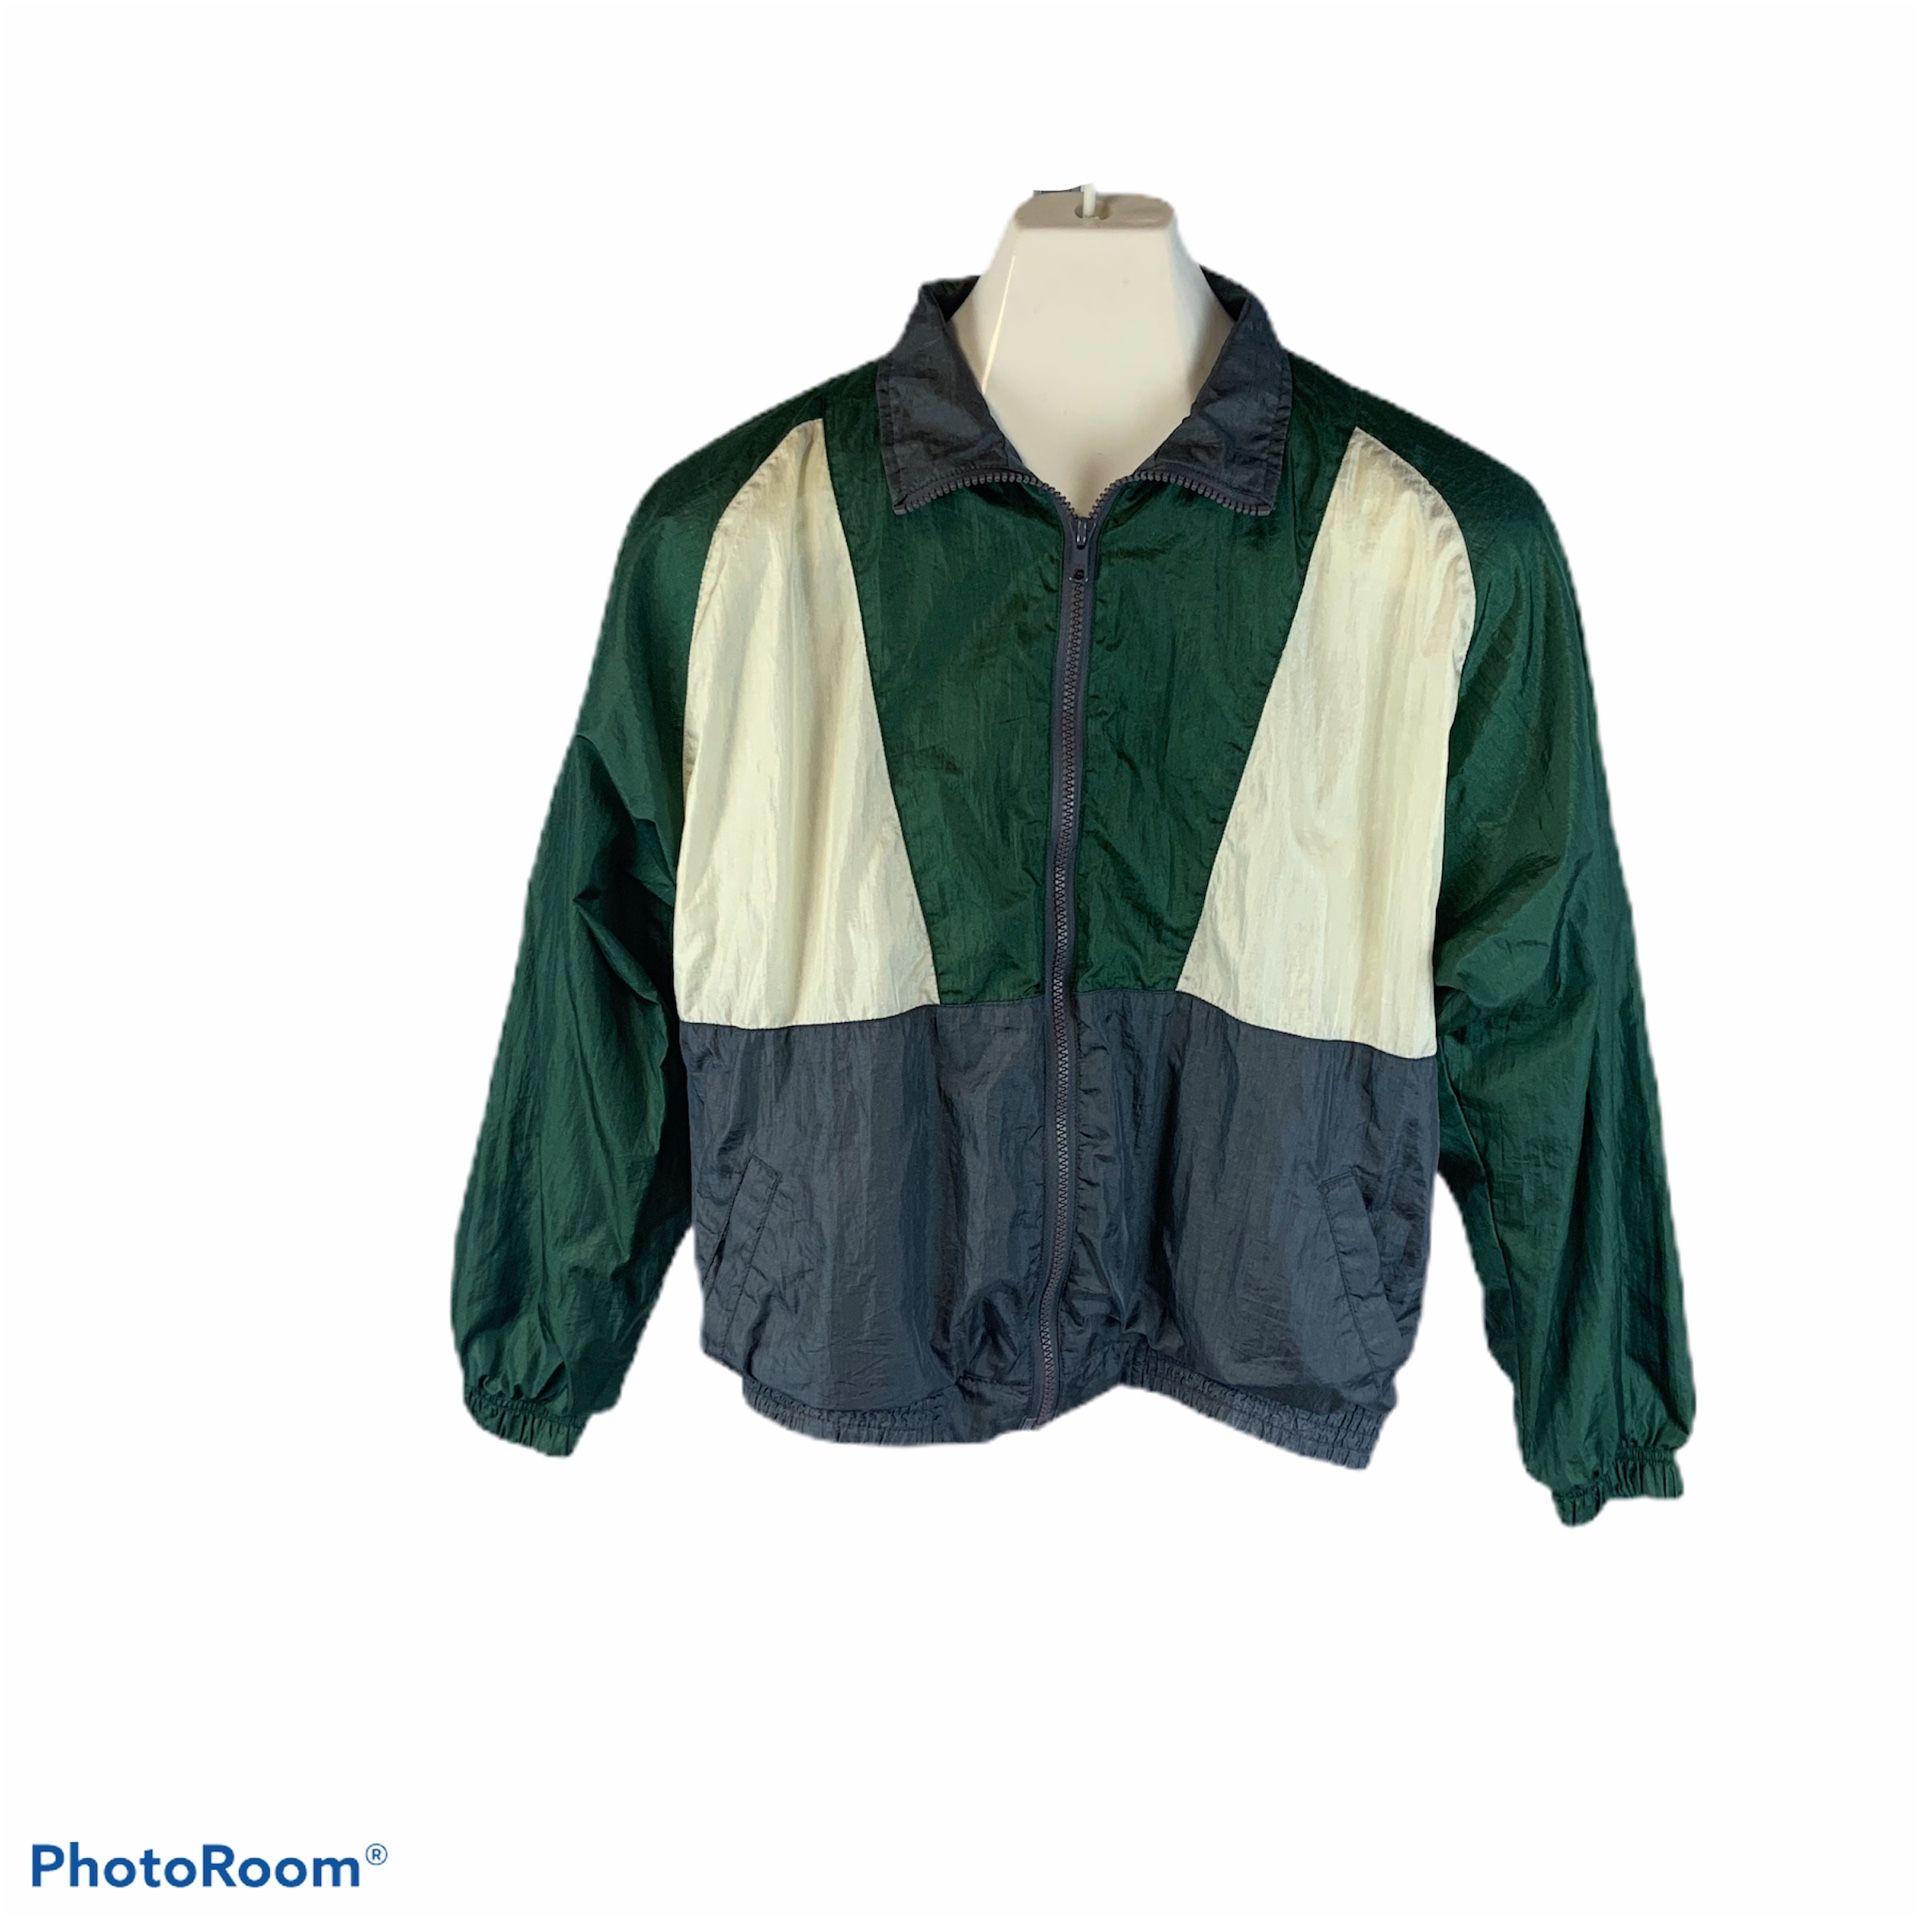 Kid’s vintage Max Active track jacket size Large